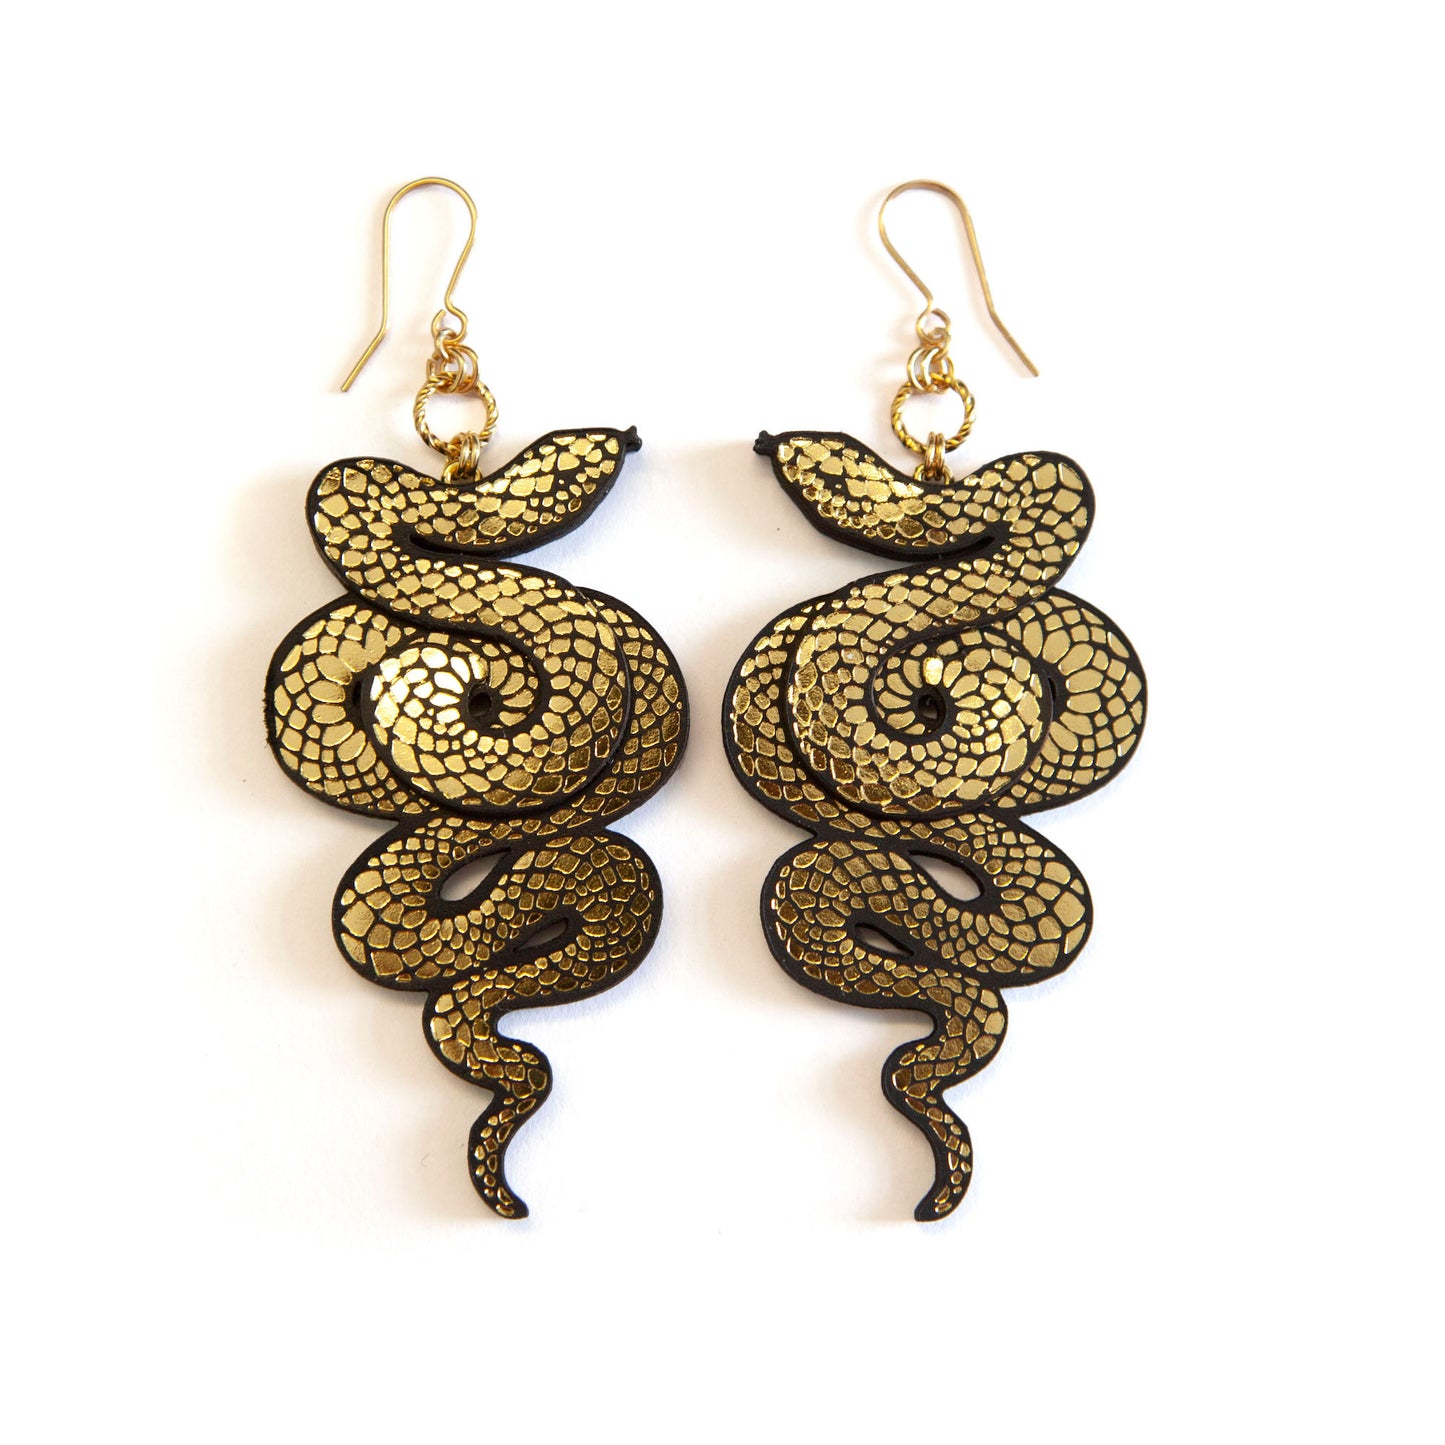  black & gold leather serpent earrings